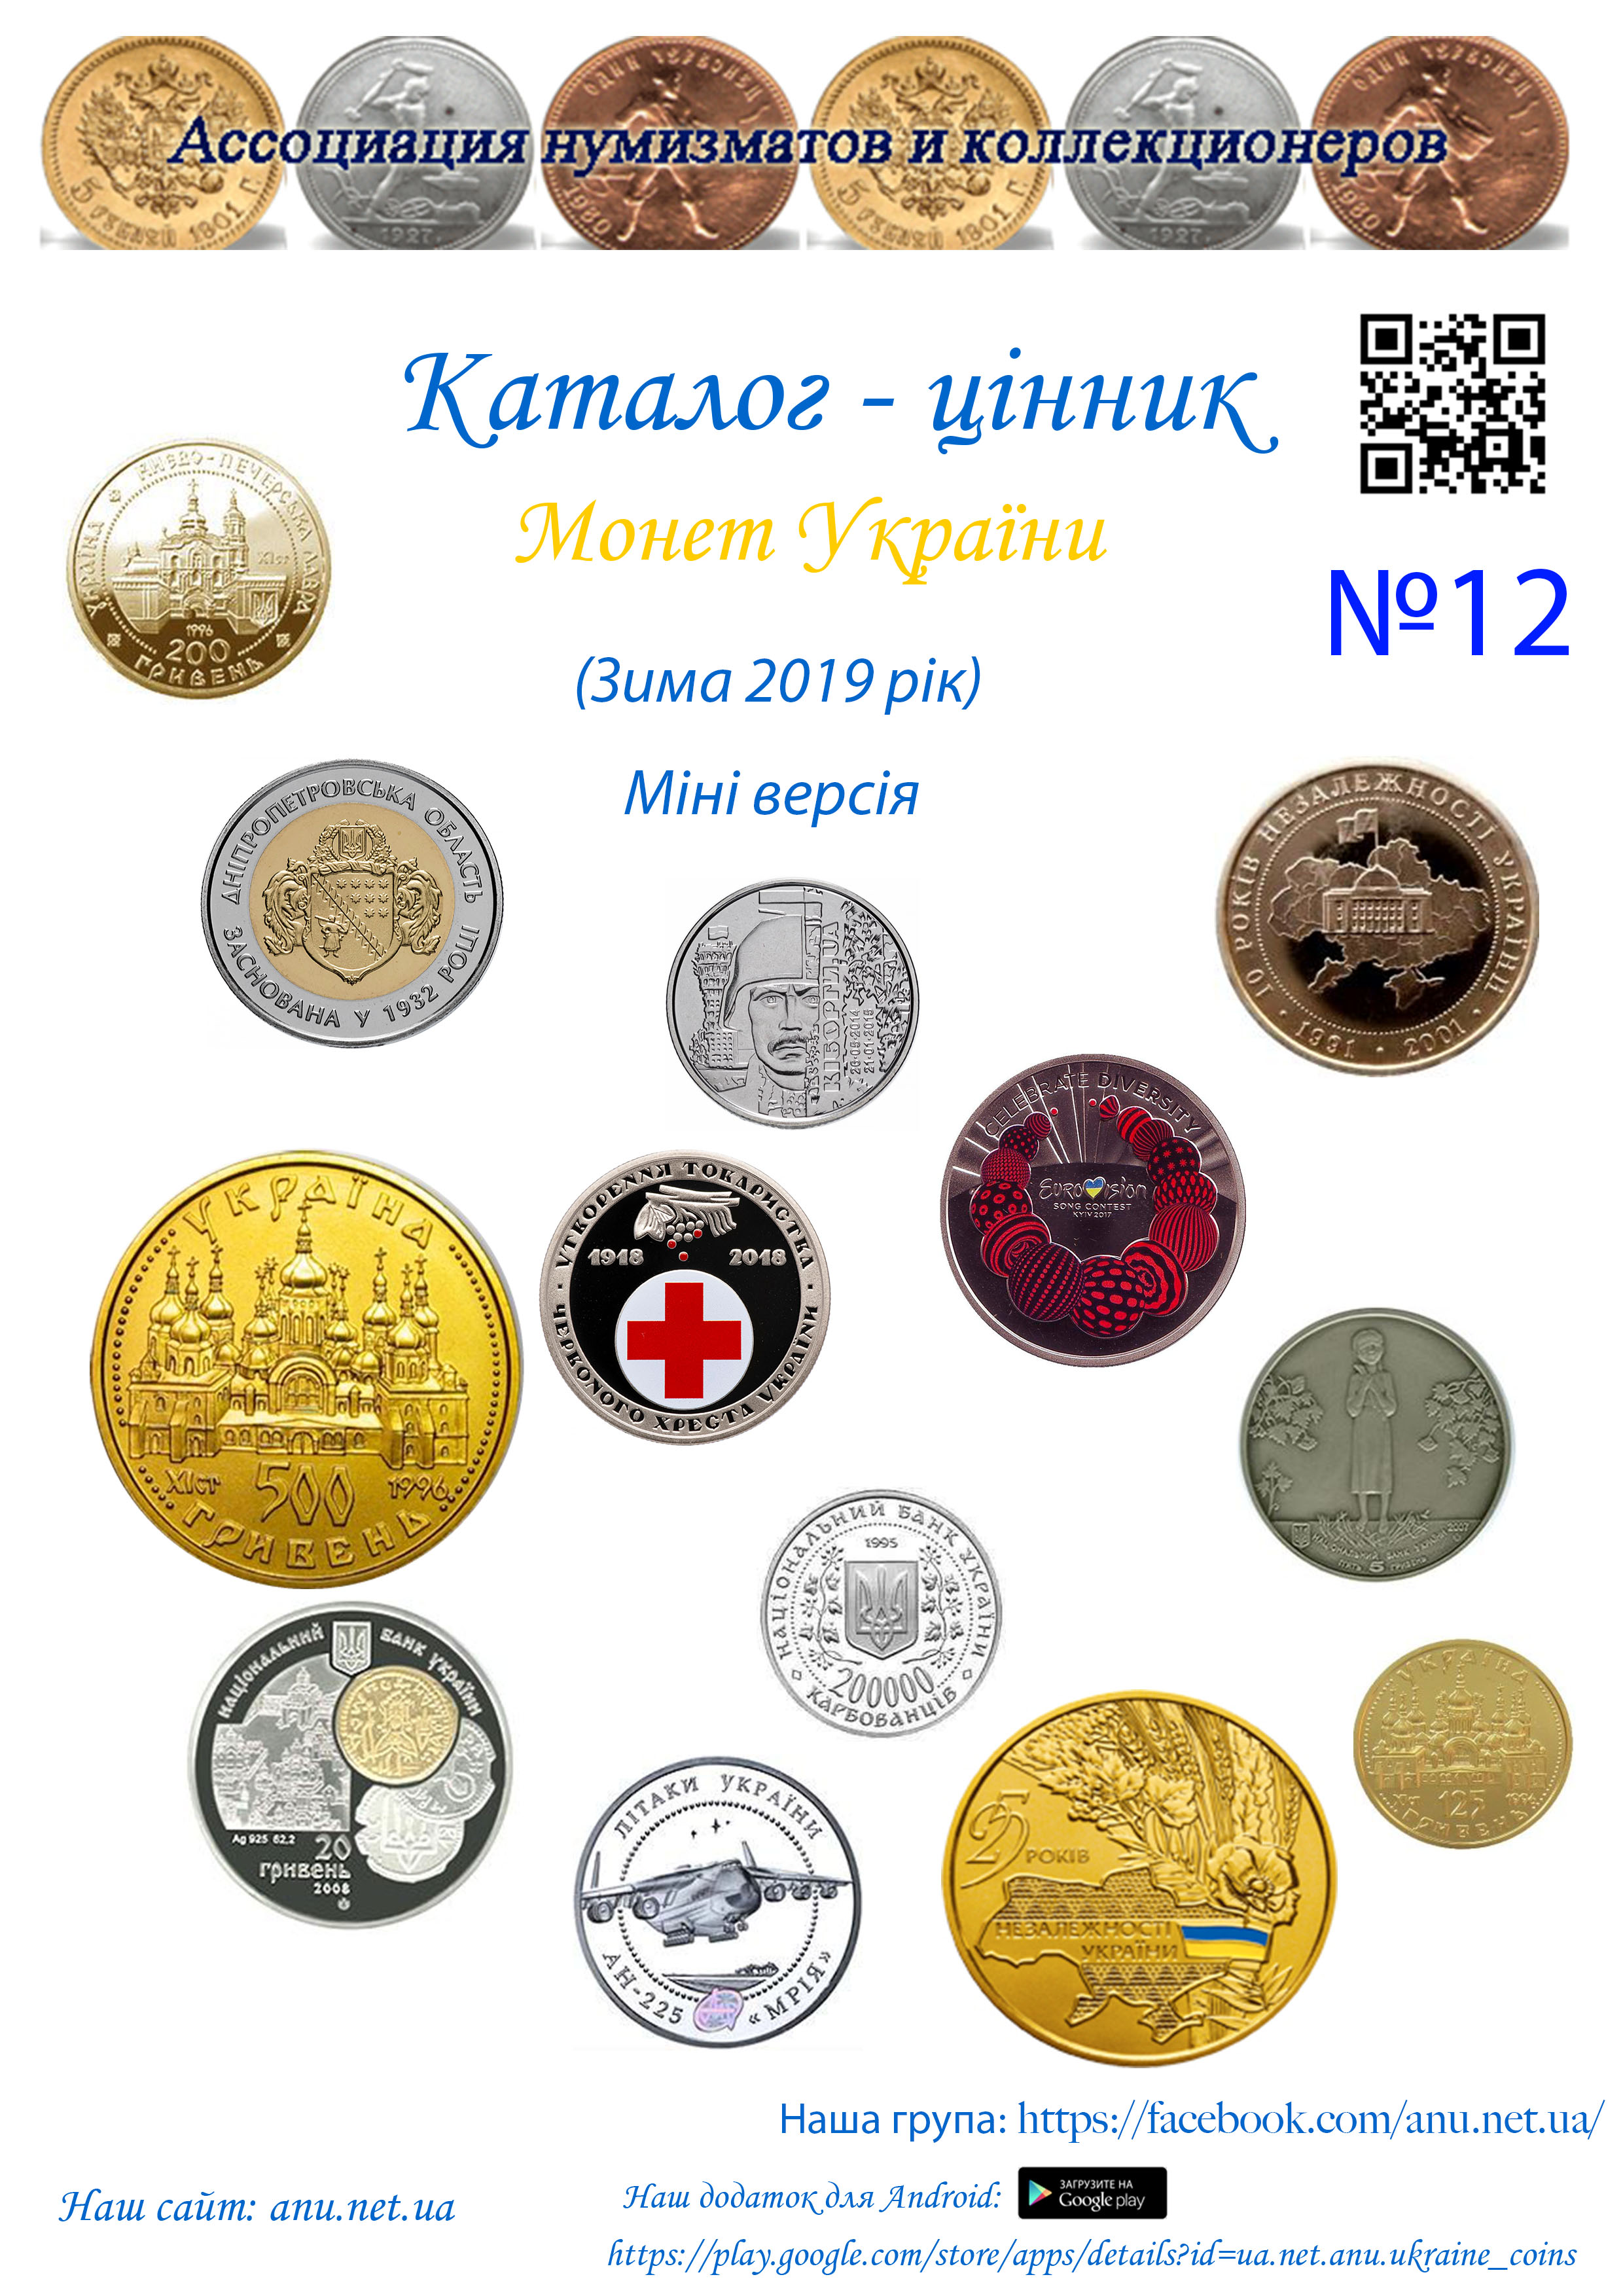 Version_12 Каталог монет Украины